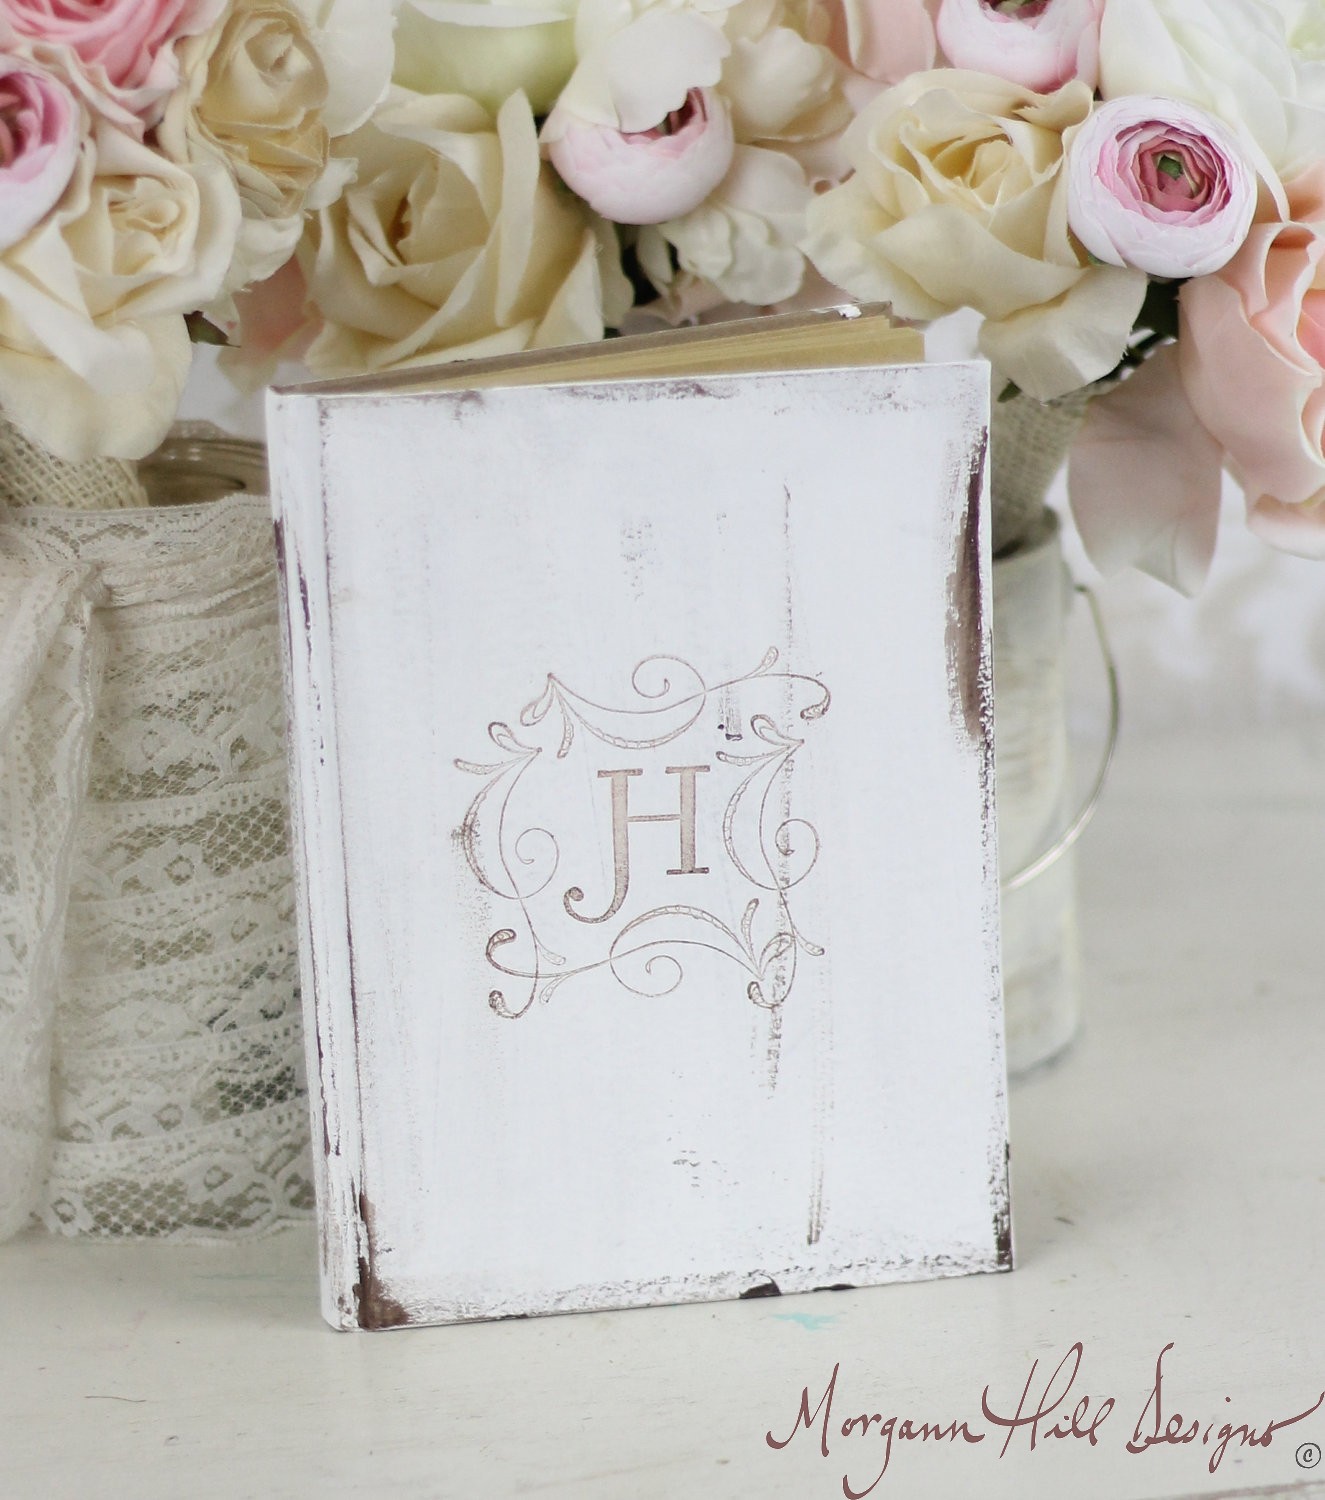 Morgann Hill Designs Bridal Shower Rustic Guest Book Shabby Chic